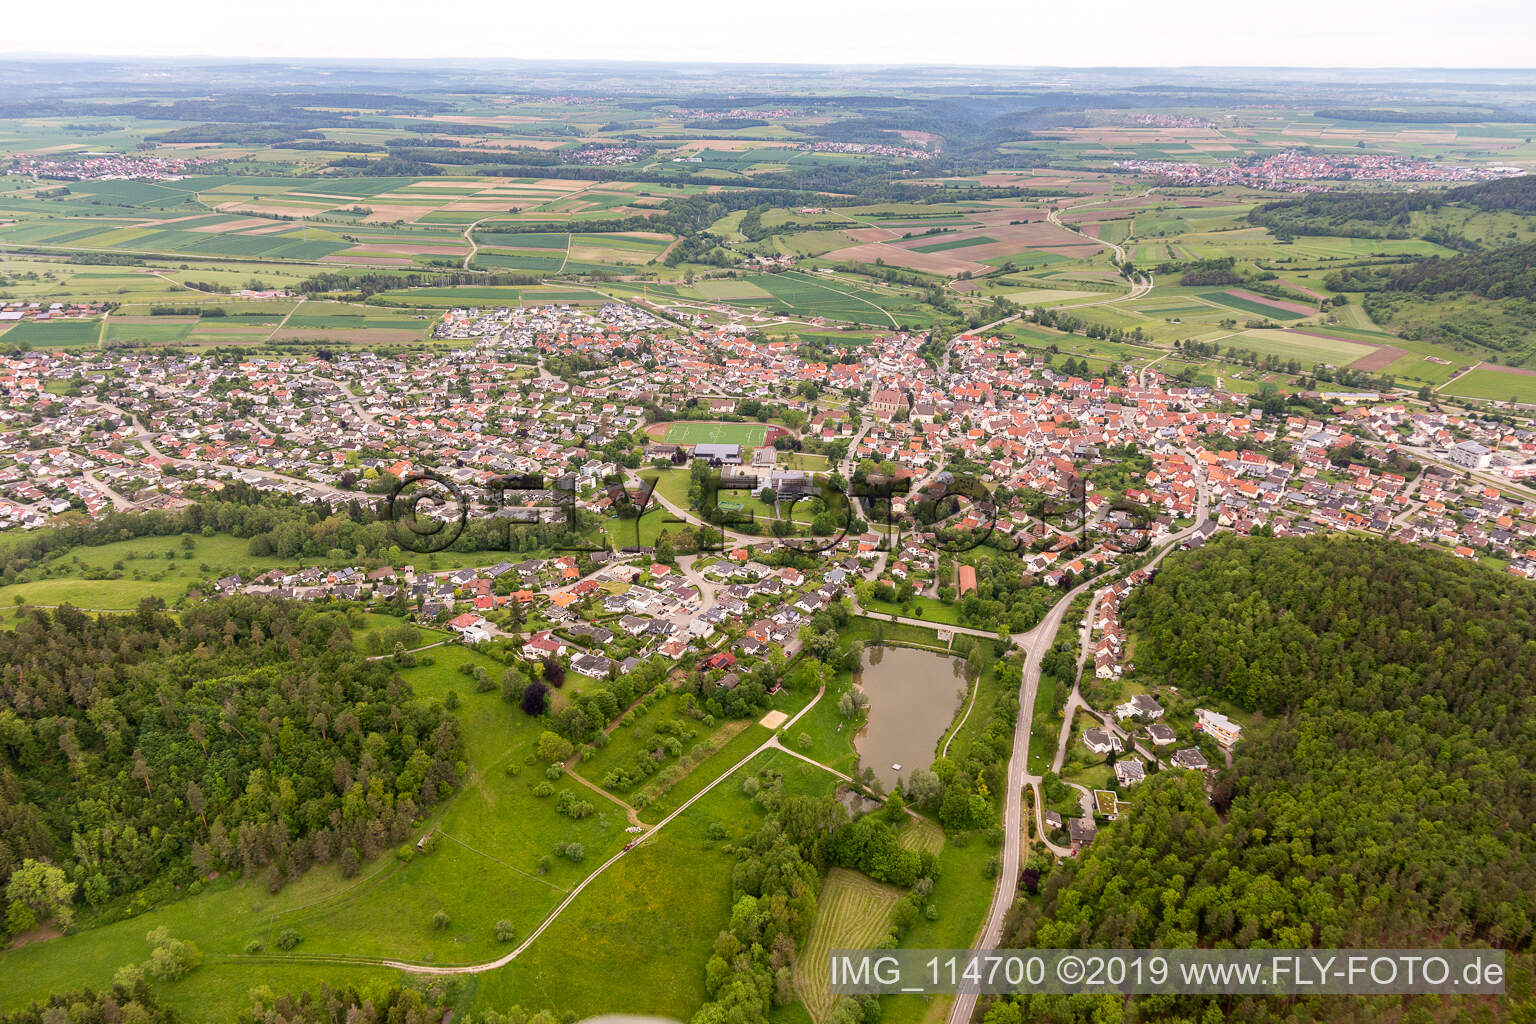 Aerial view of Rangendingen in the state Baden-Wuerttemberg, Germany